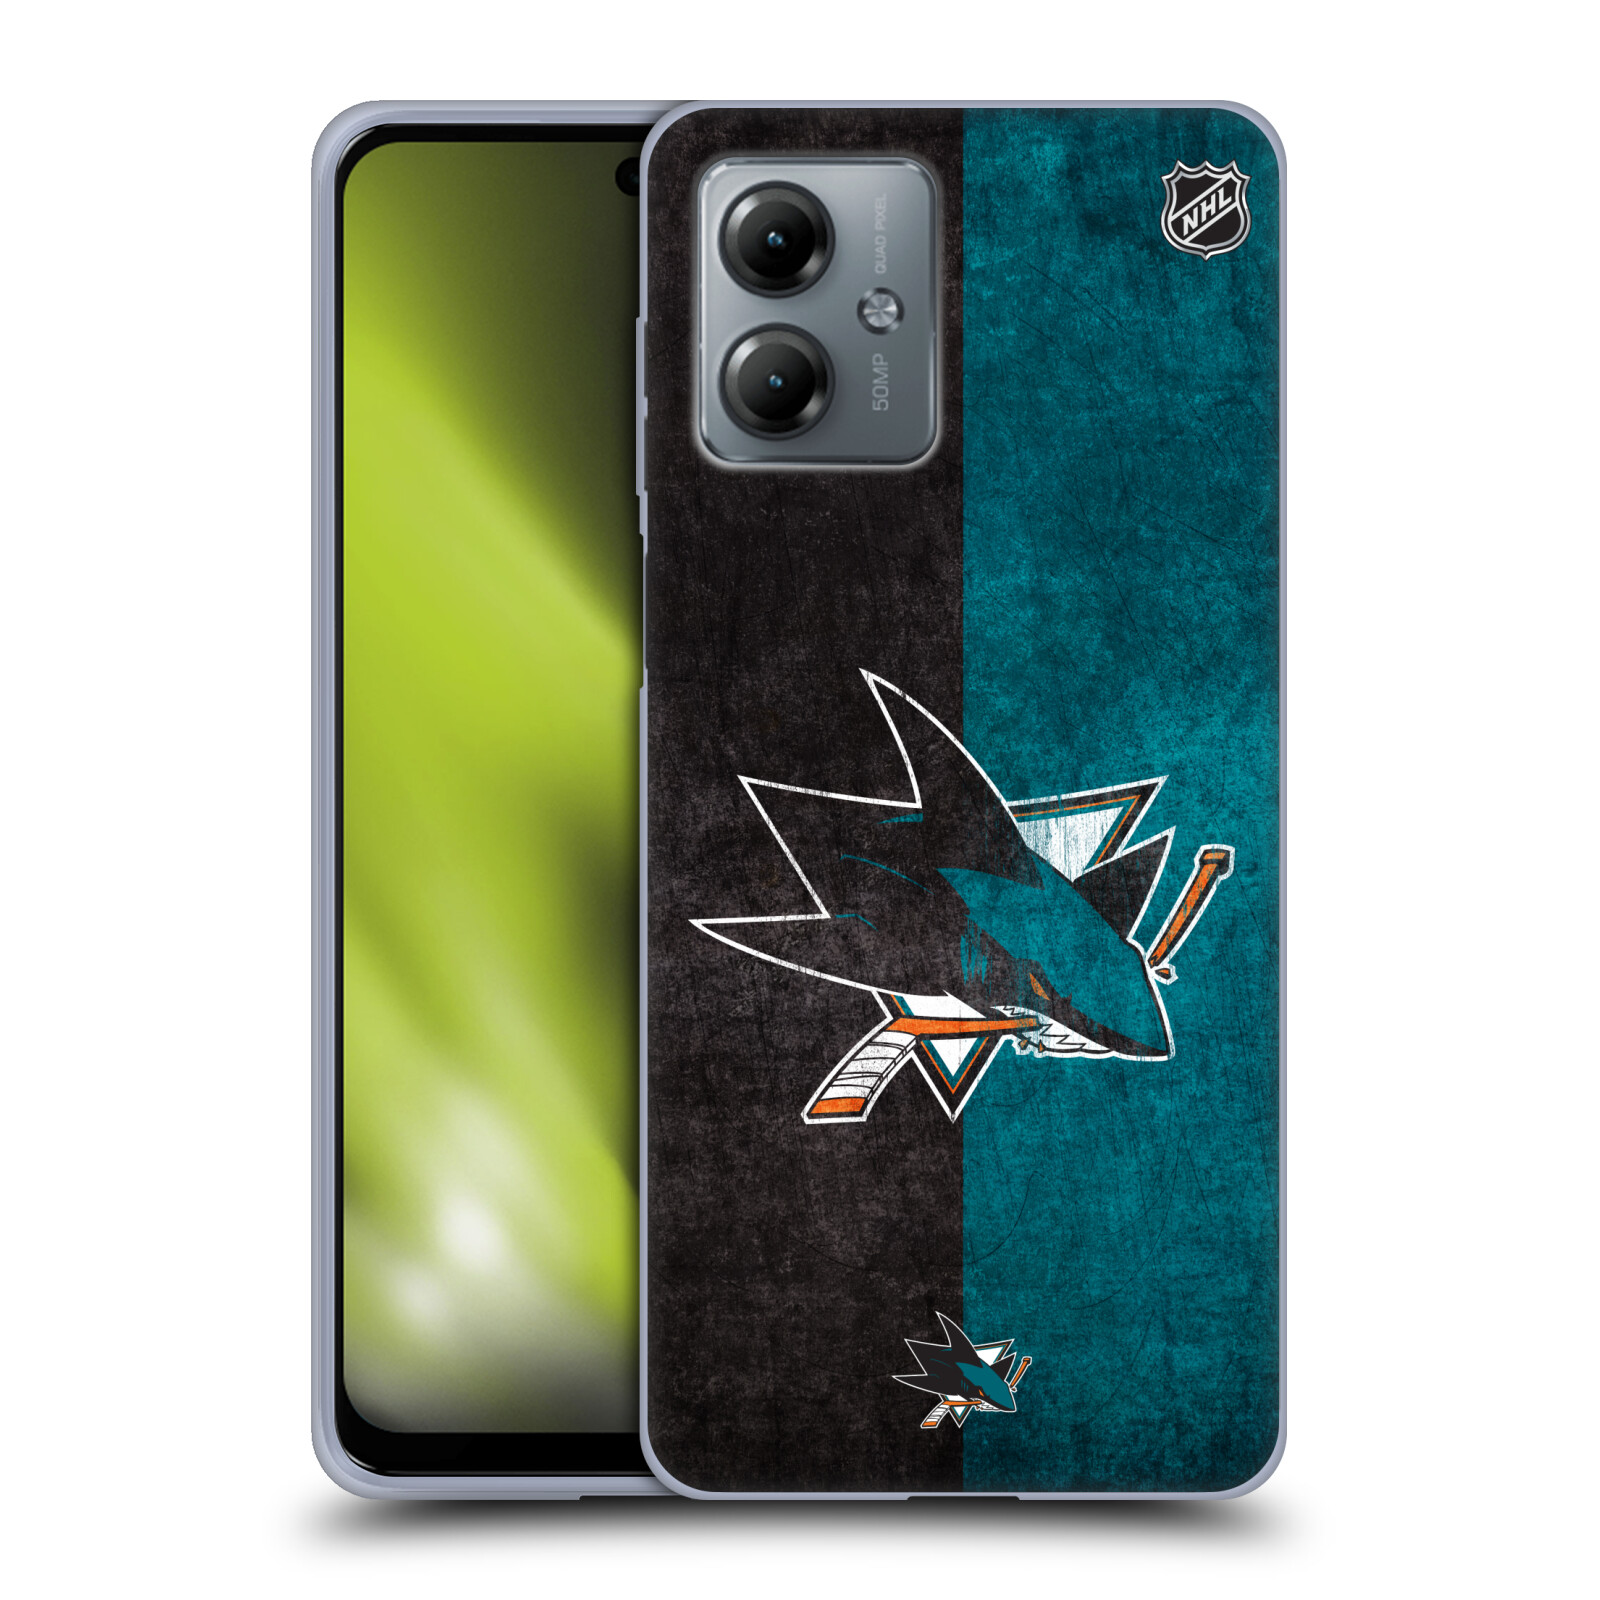 Silikonové pouzdro na mobil Motorola Moto G14 - NHL - Půlené logo San Jose Sharks (Silikonový kryt, obal, pouzdro na mobilní telefon Motorola Moto G14 s licencovaným motivem NHL - Půlené logo San Jose Sharks)